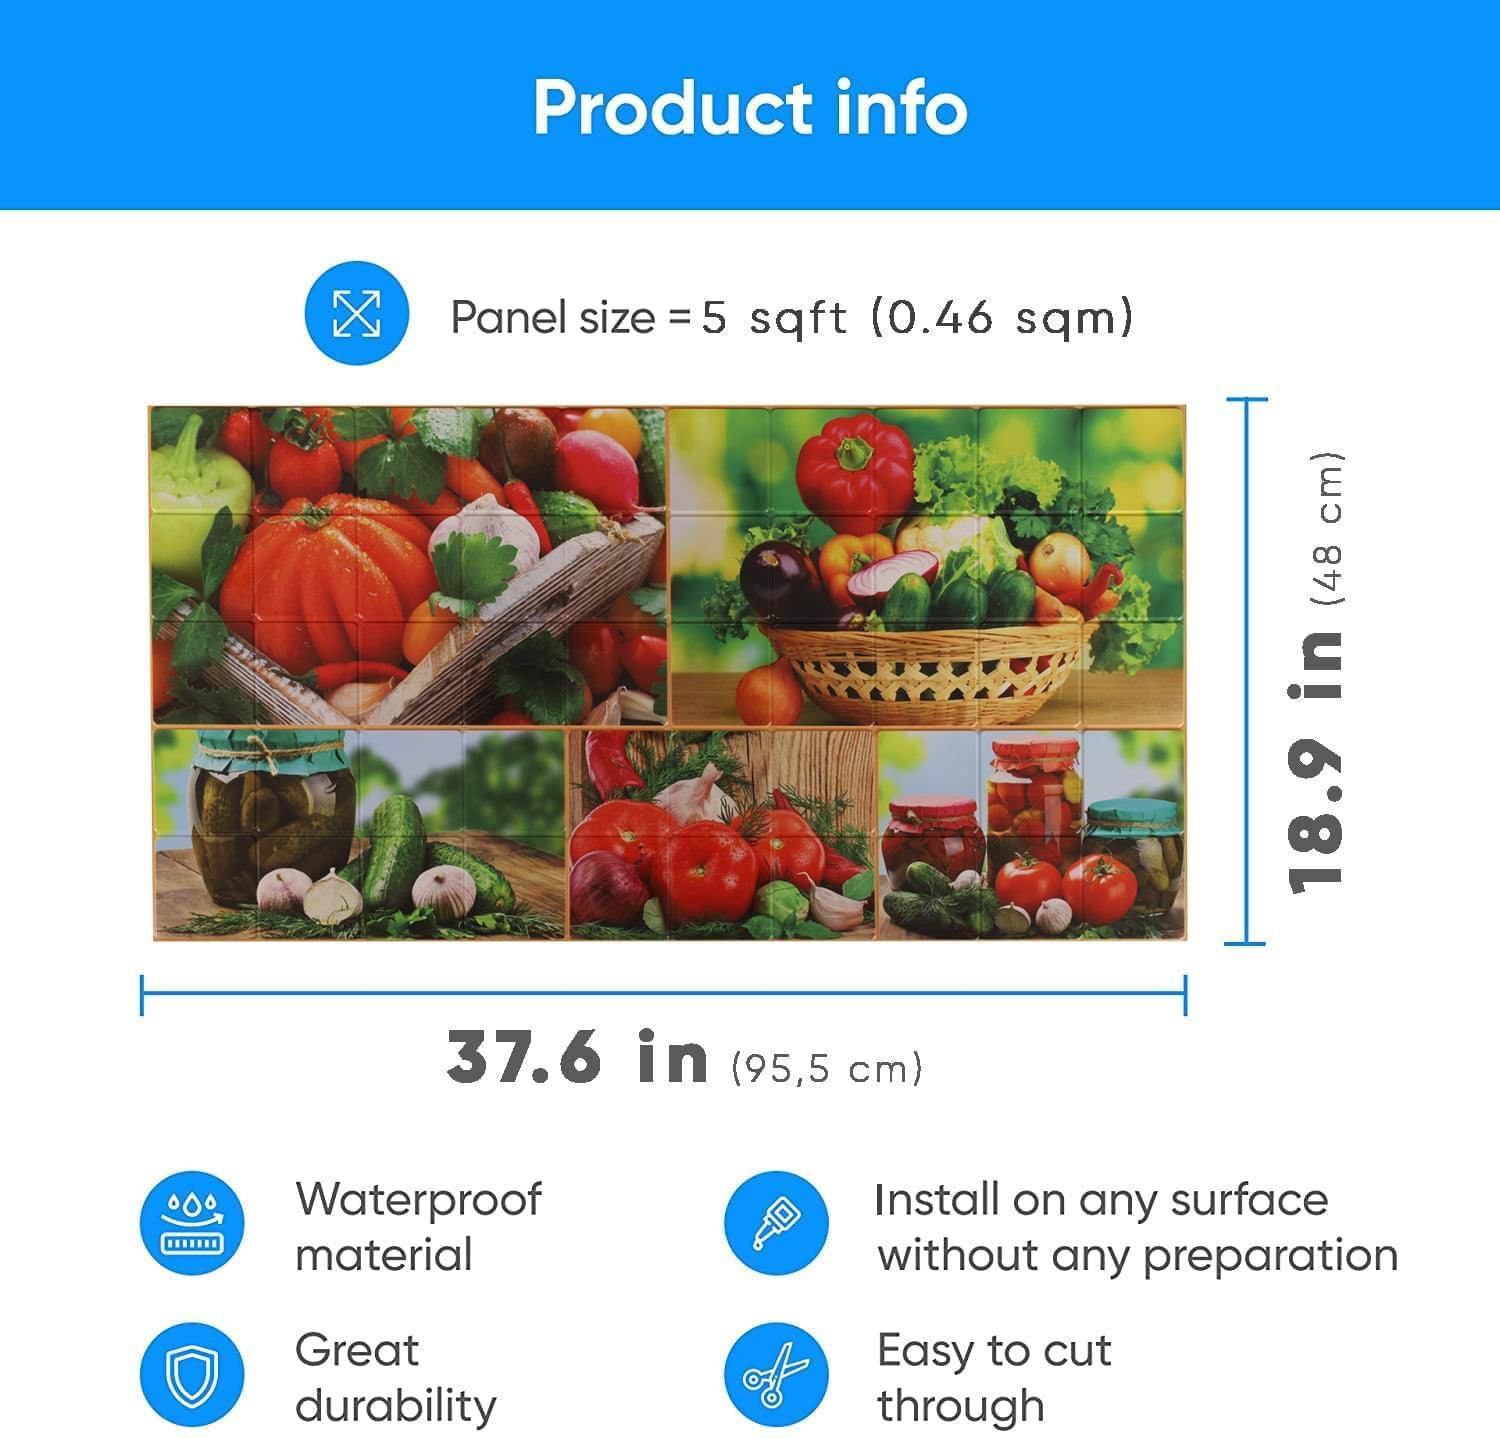 3D Wall Panels - Mosaic bountiful harvest - Smart Profile